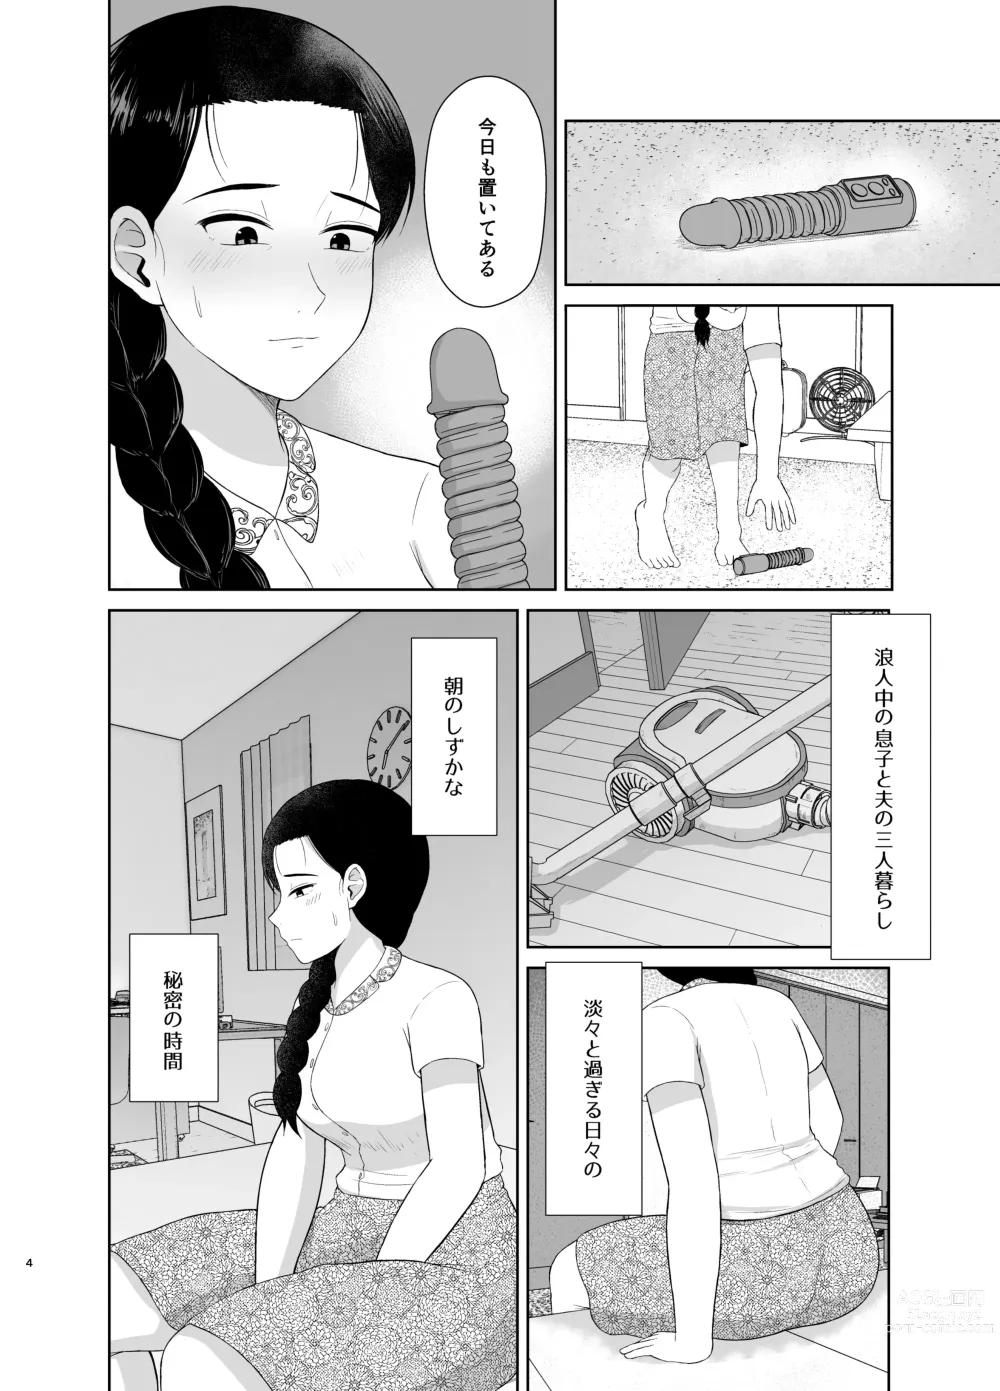 Page 4 of doujinshi Haha wa Omocha 1